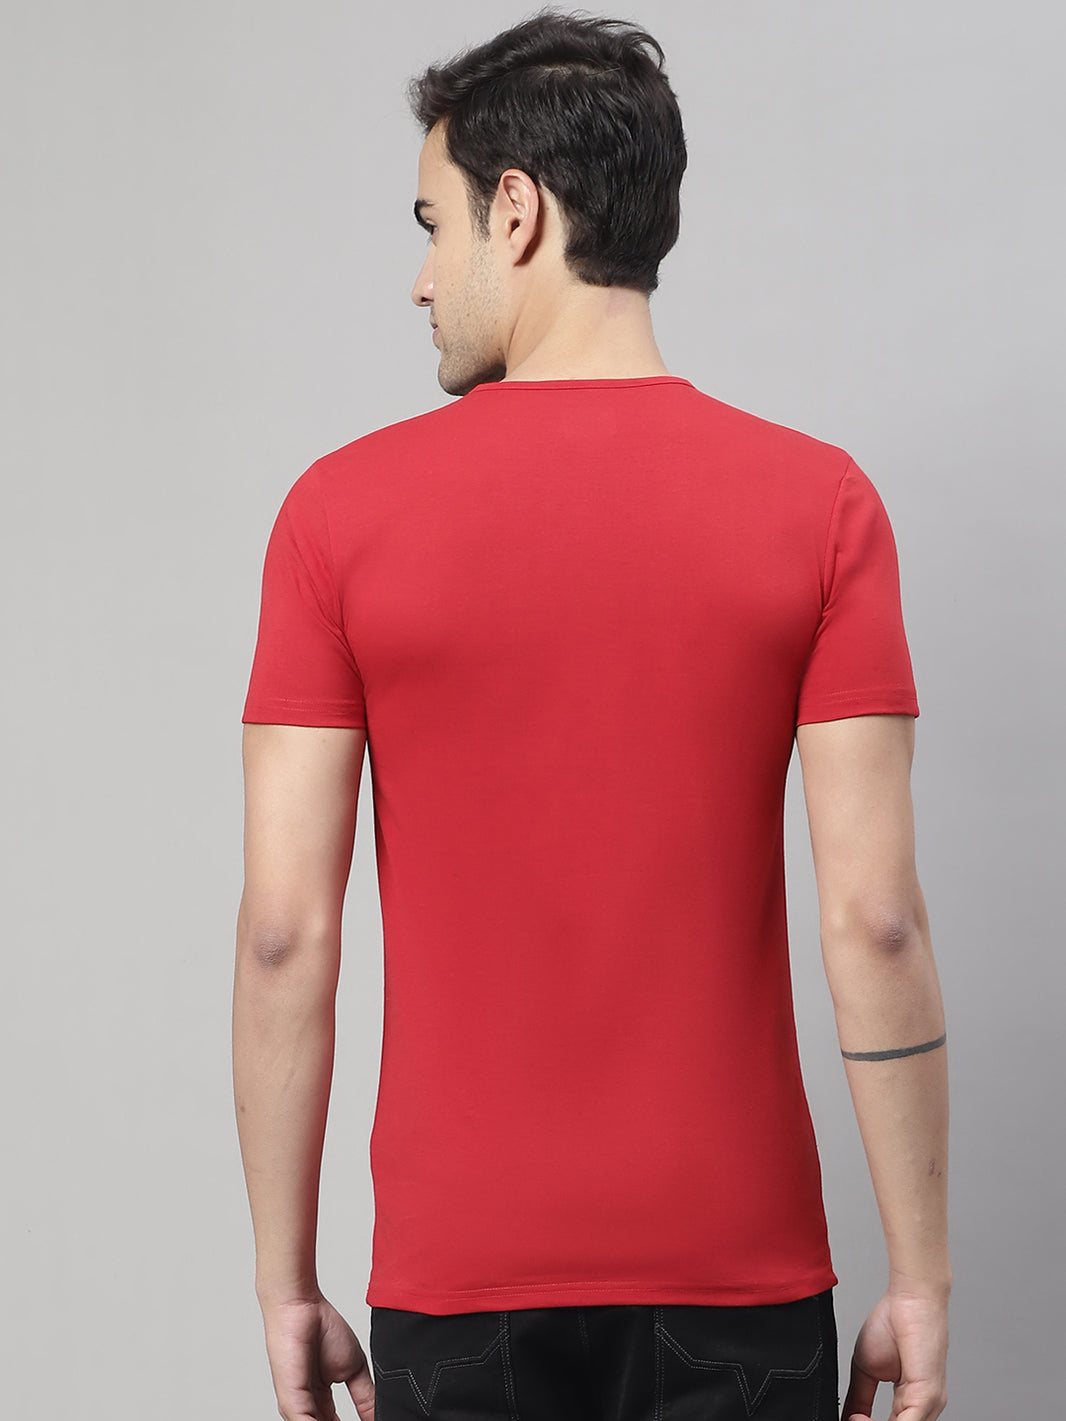 Vimal Jonney Round Neck Cotton Printed Red T-Shirt for Men